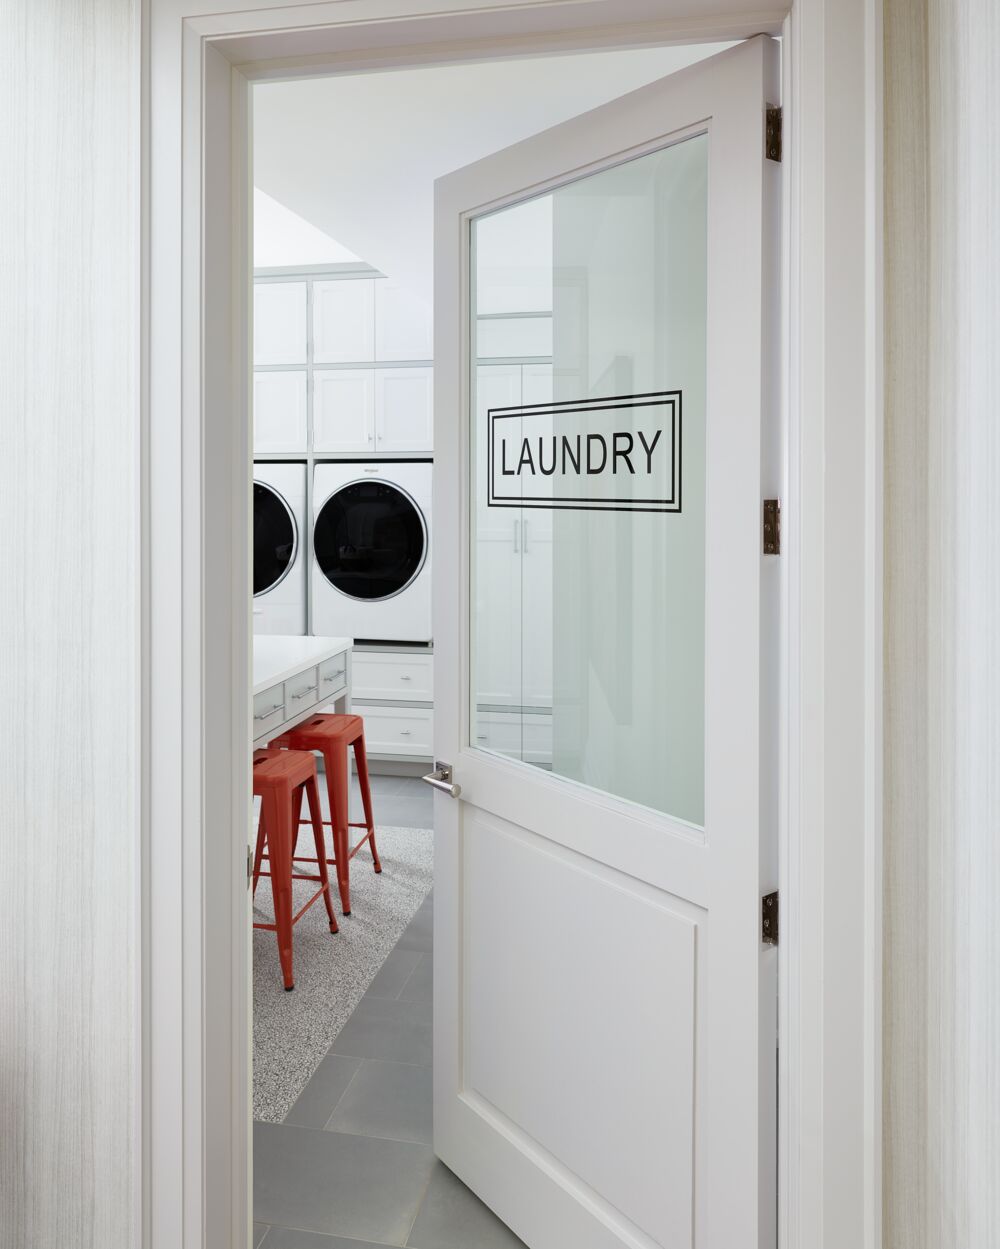 Inspiring laundry room design by Gluckstein Design Planning